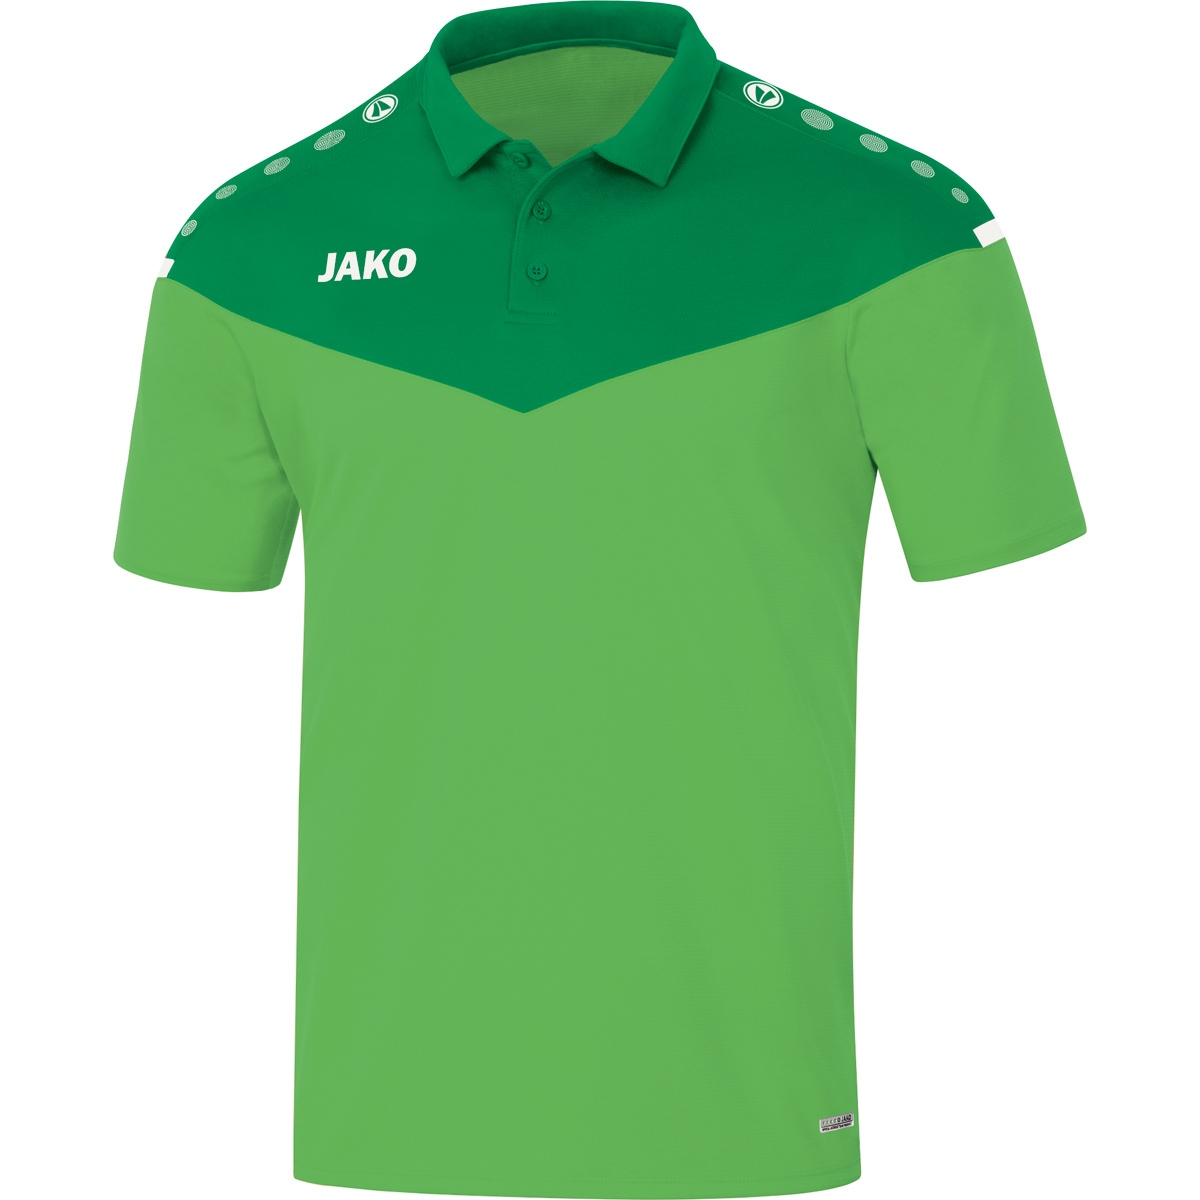 JAKO Herren, 2.0 L, Champ green/sportgrün, 6320 Polo Gr. soft